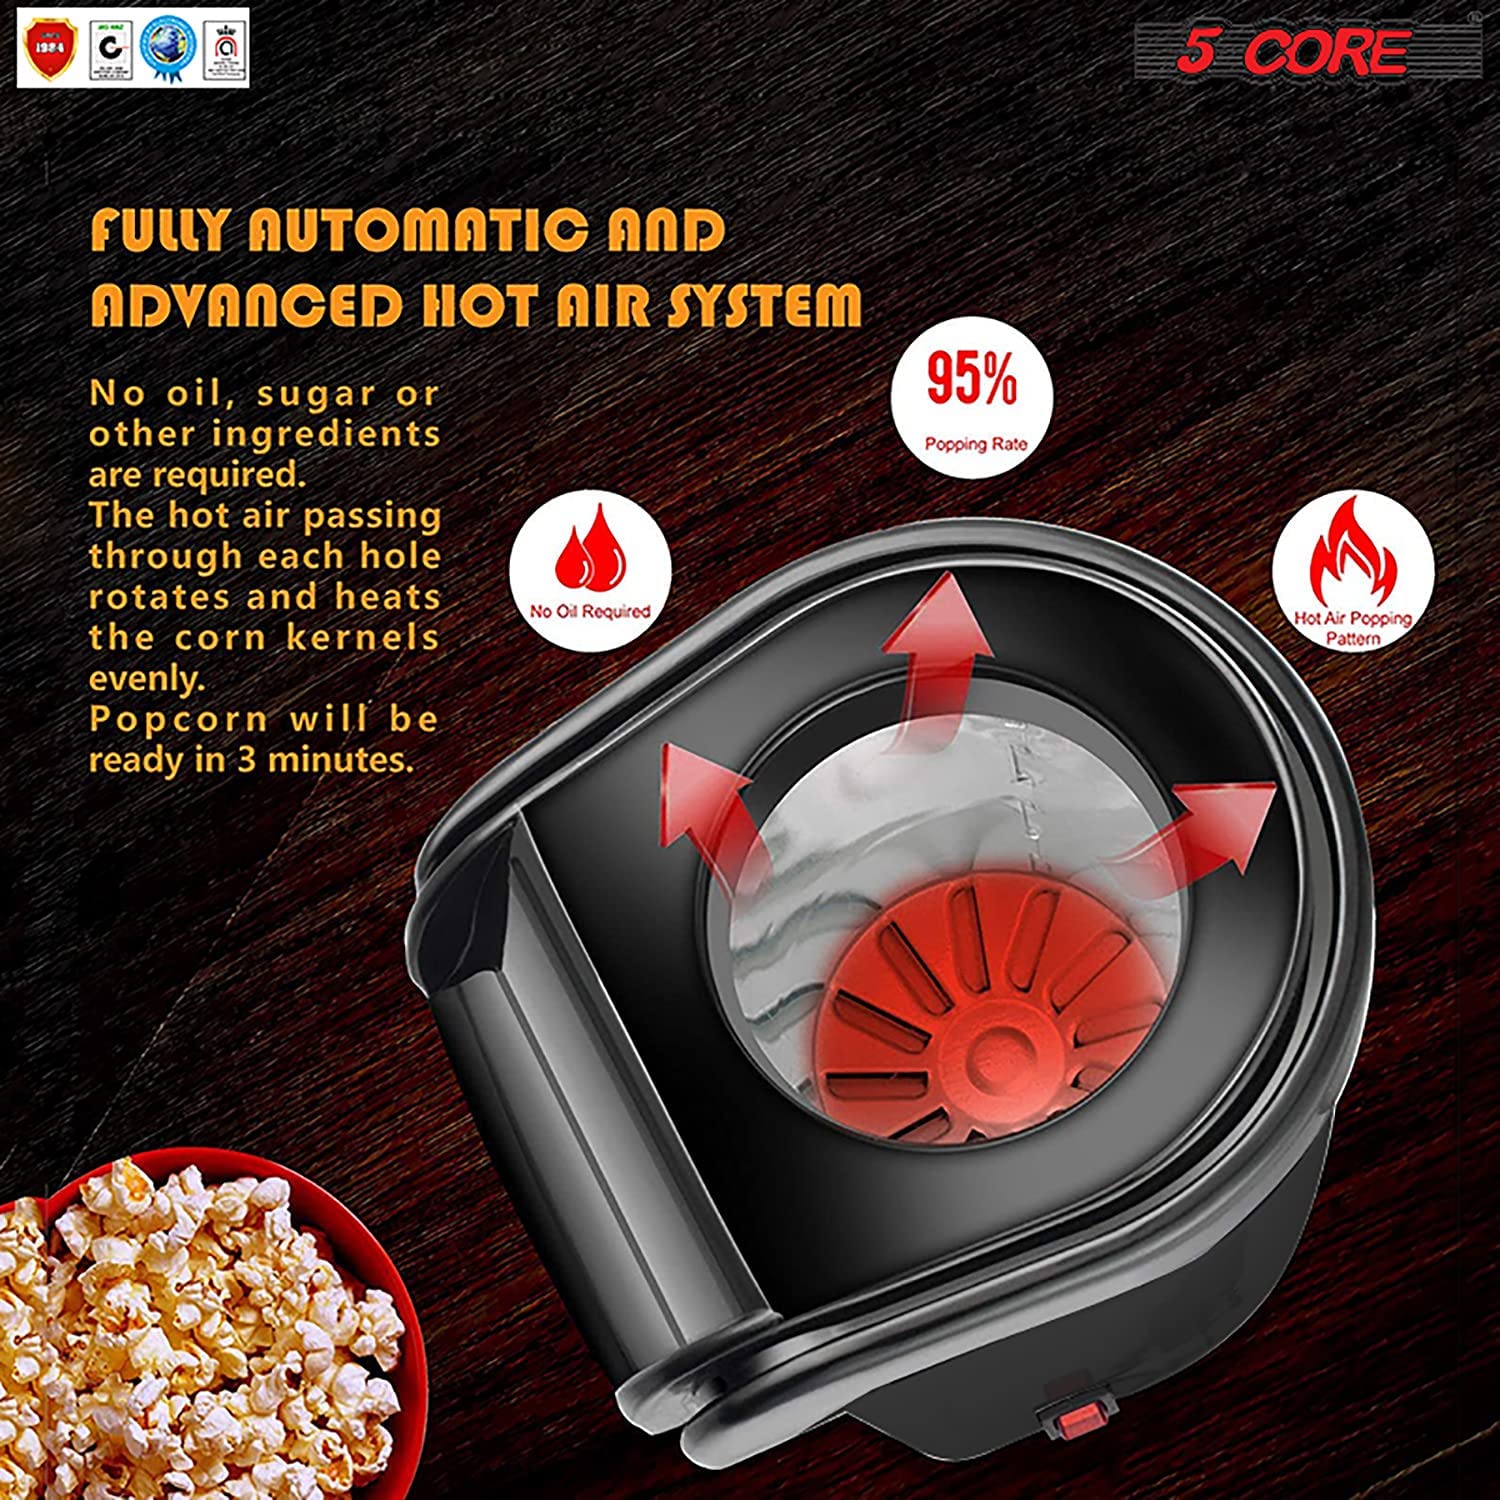 5 Core Hot Air Popcorn Machine - 16 Cup Capacity, Electric Oil-Free Popper